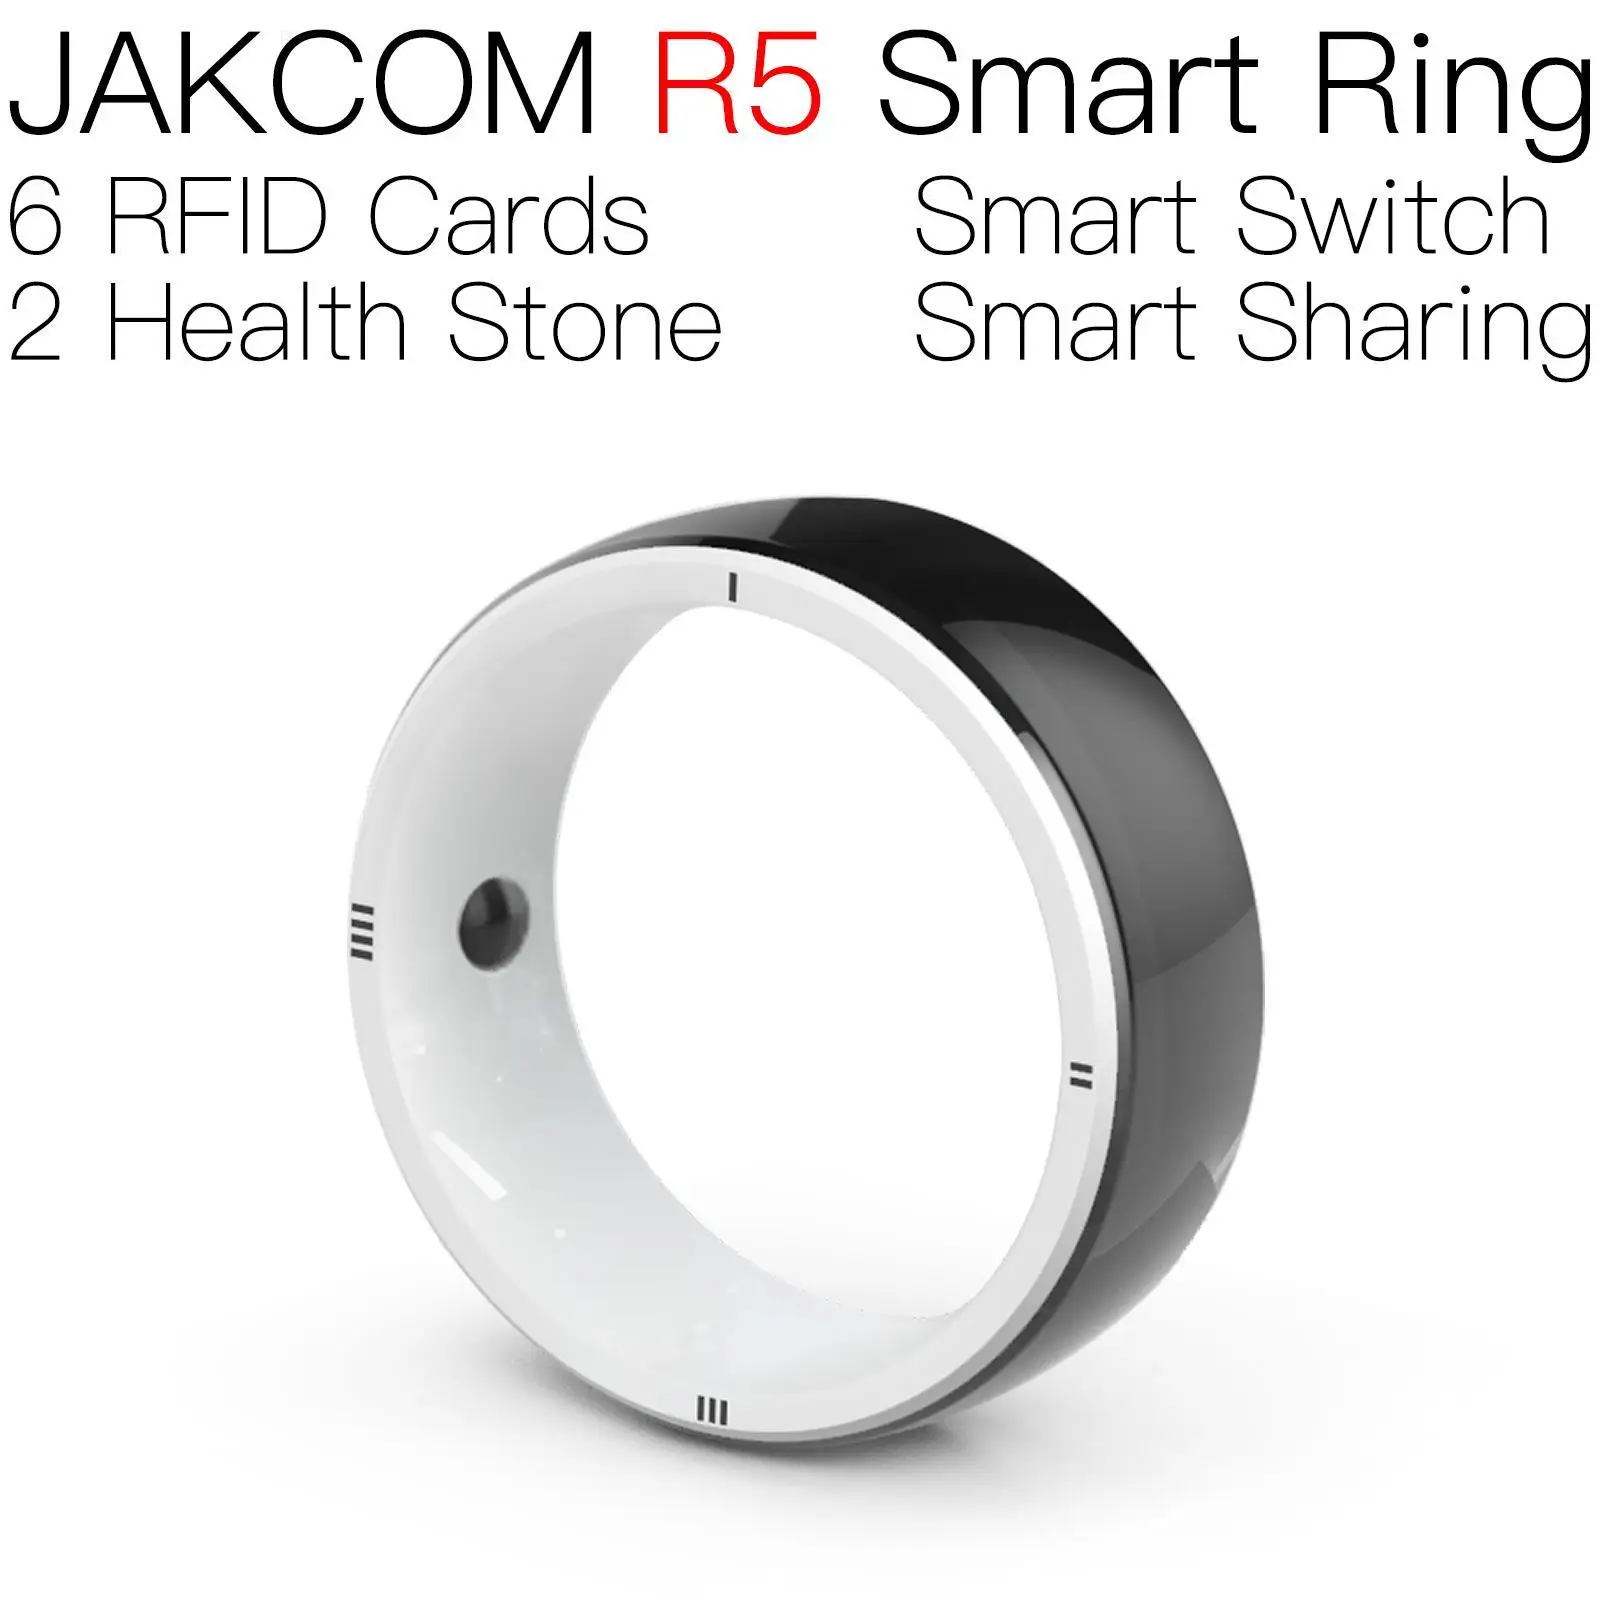 

JAKCOM R5 Smart Ring Nice than patrol rf id tag uhf 125khz rewritable t5577 nfc chip nail asic etc badge 13 56mhz rfid reader